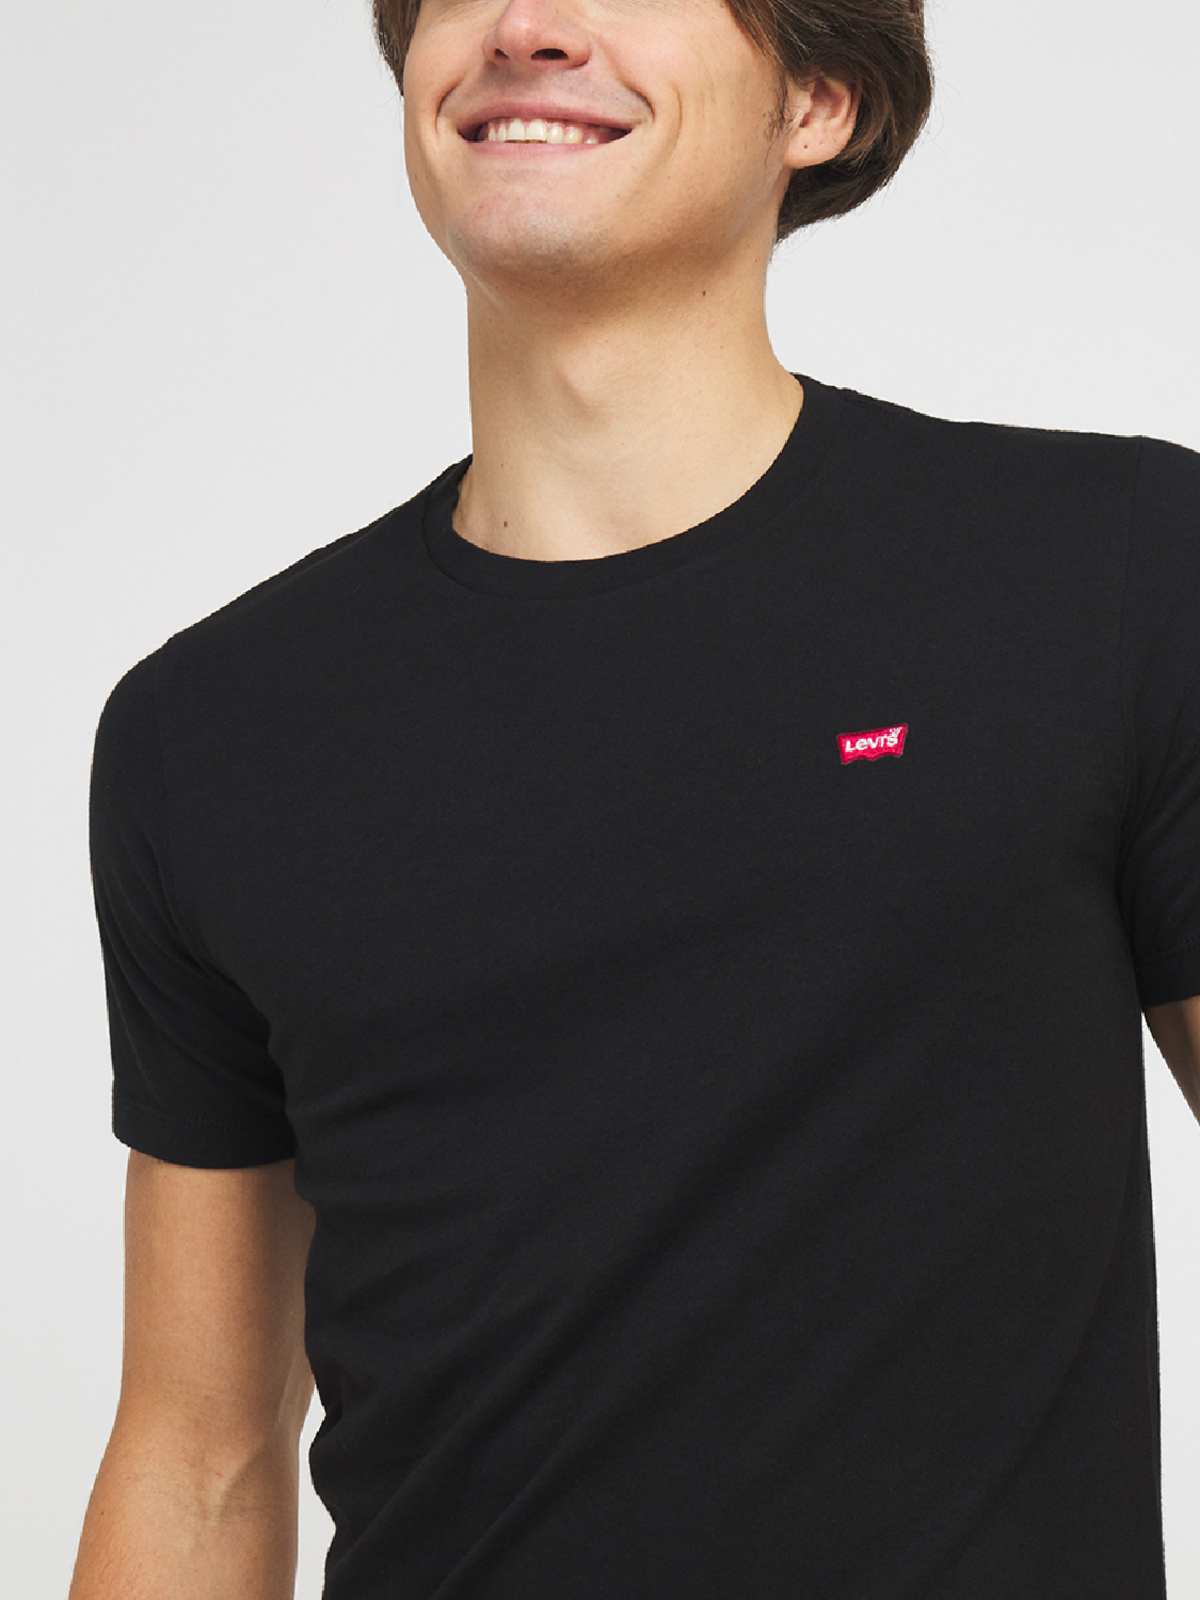 T Shirt Levi's homme Original Tee kaki logo brodé